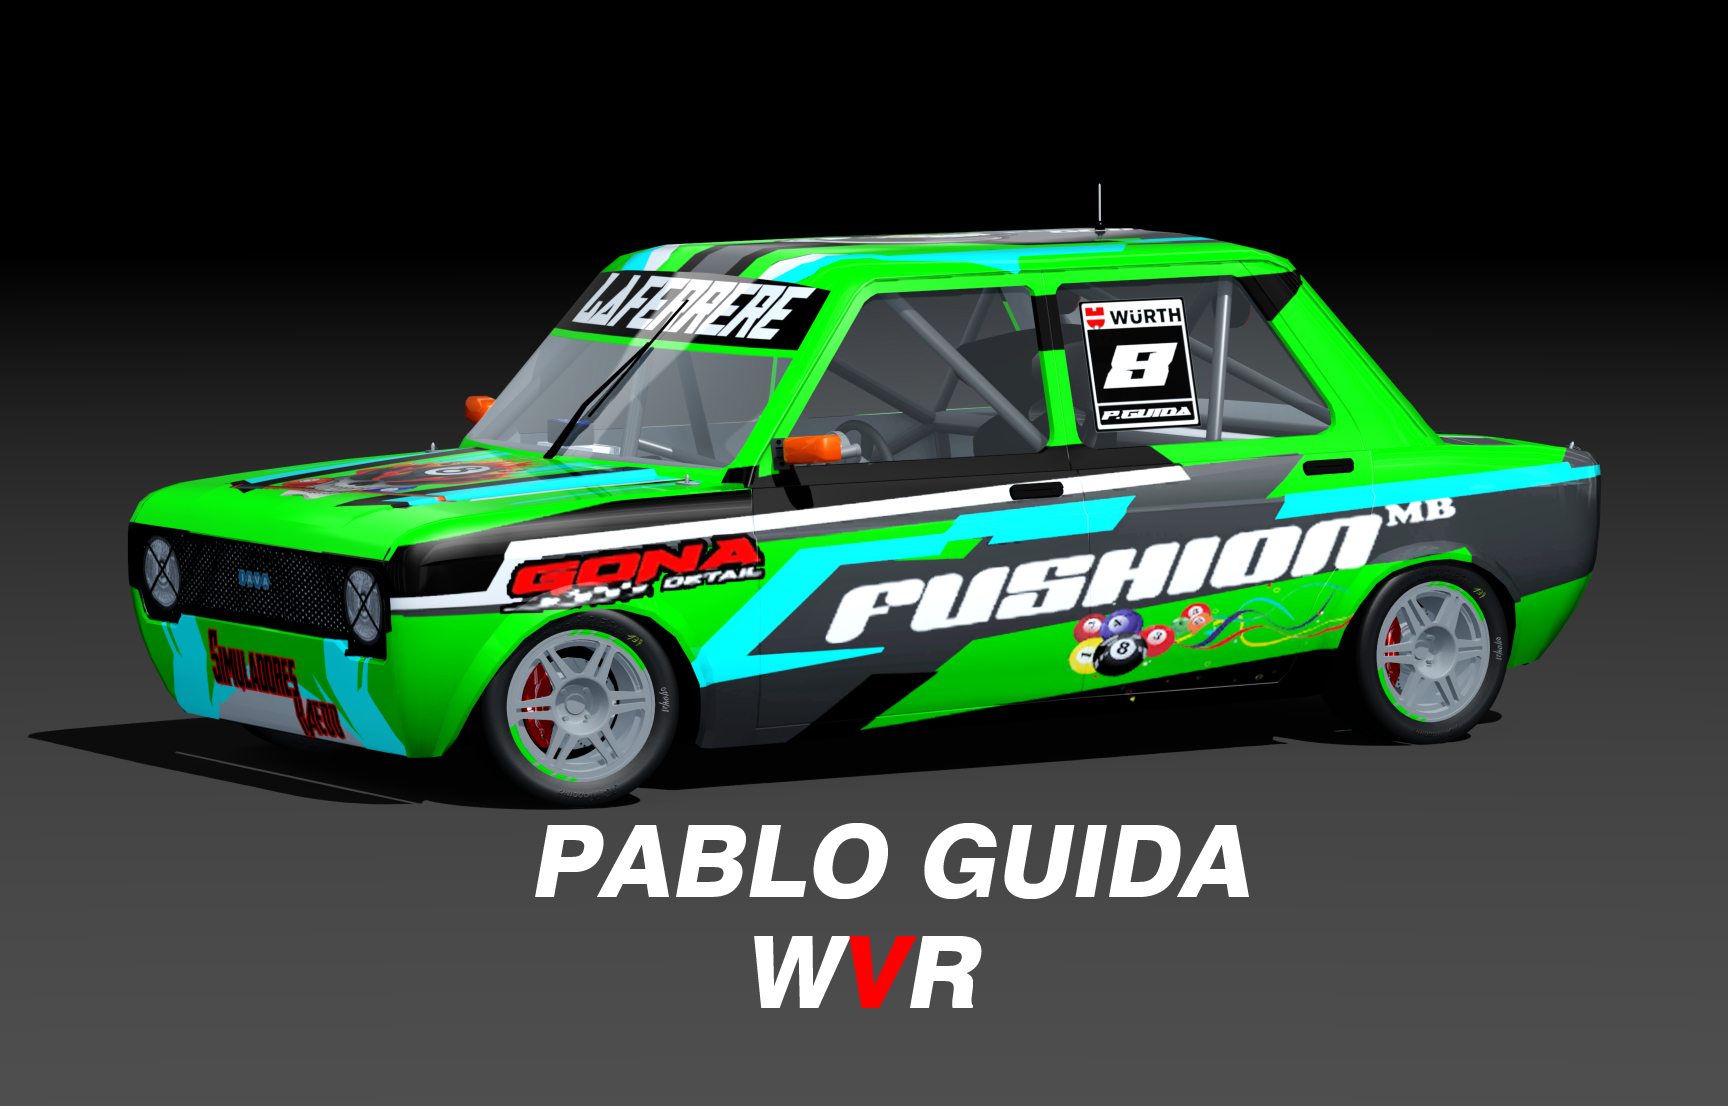 WVR Turismo 1.4 FIAT 128, skin pablo guida